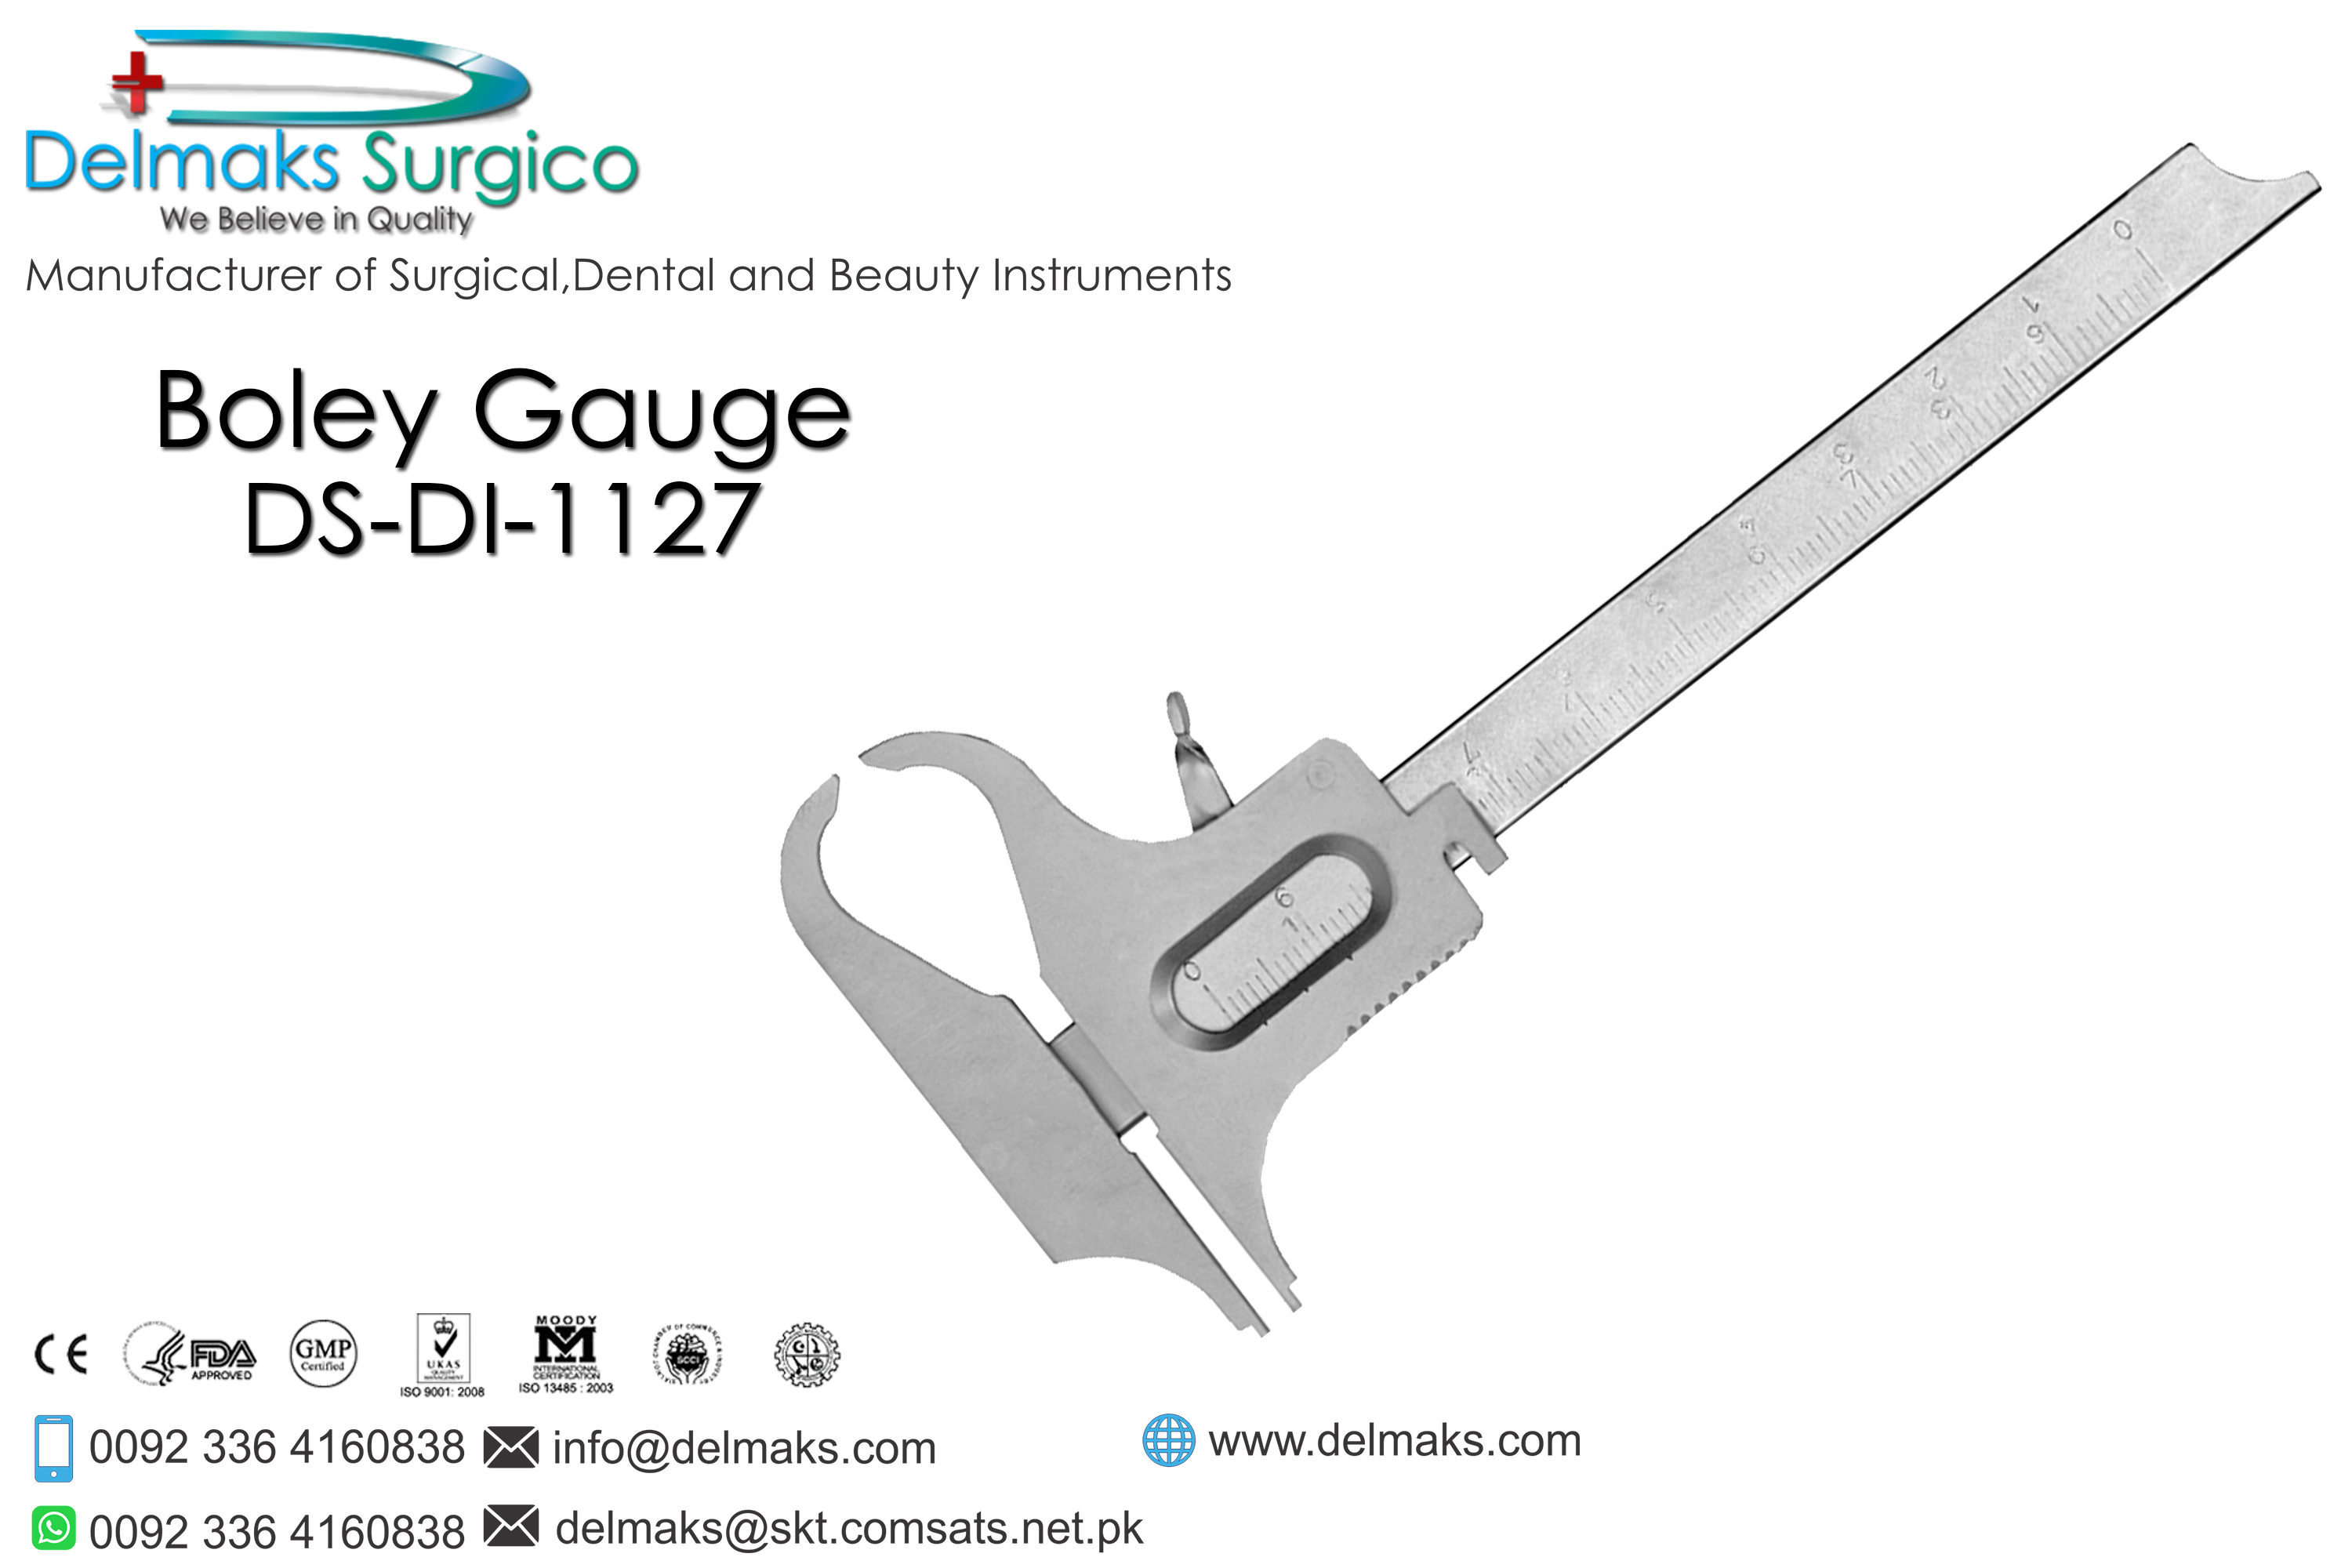 Boley Gauge Laboratory Instruments And Equipments-Dental Instruments-Delmaks Surgico